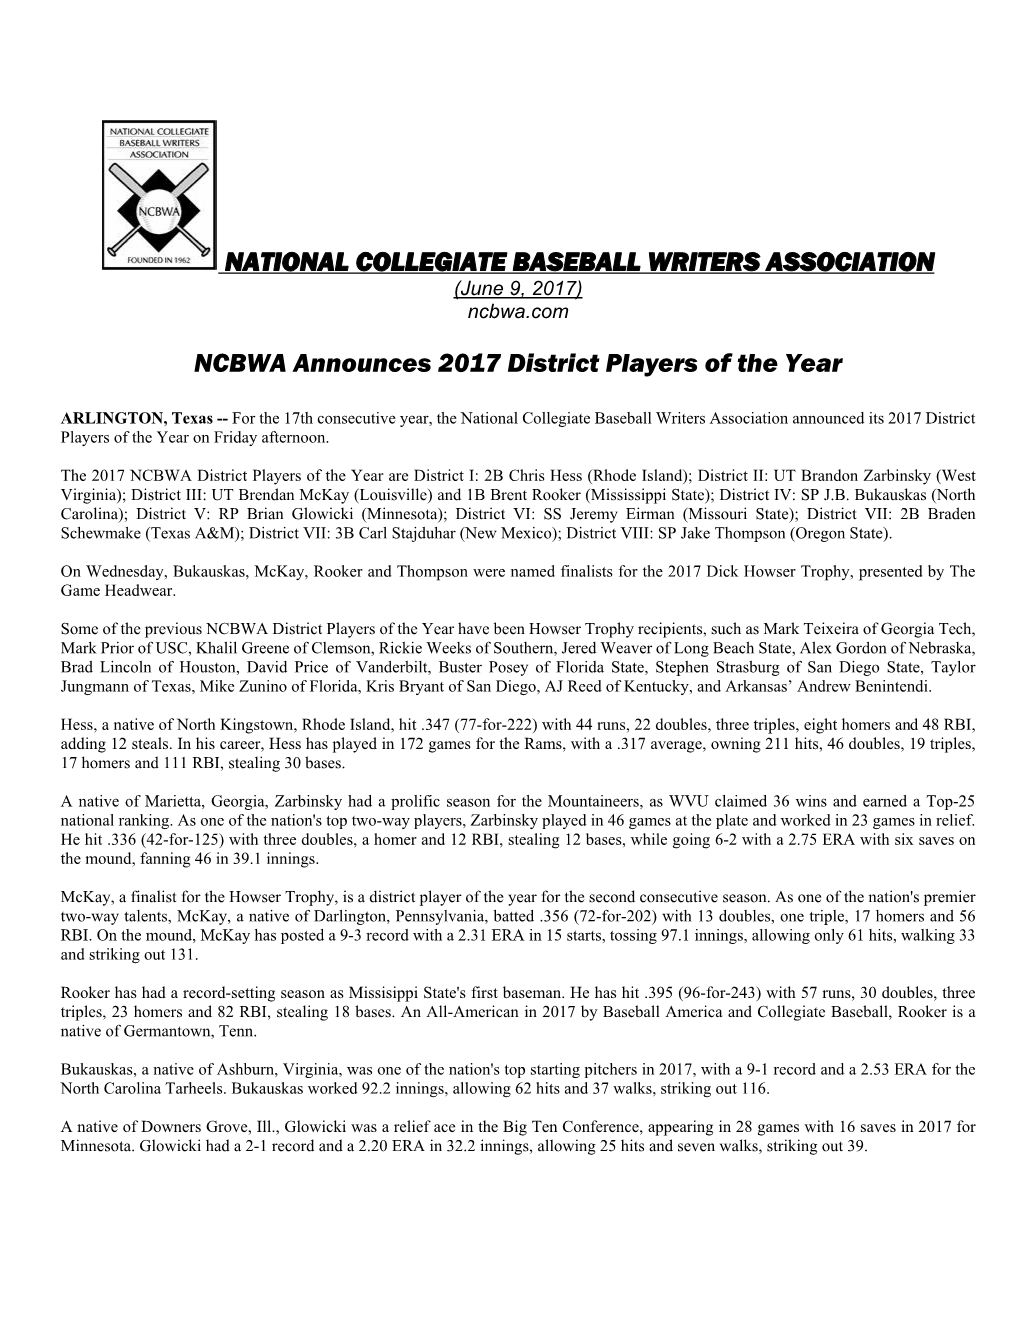 National Collegiate Baseball Writers Association Ncbwa